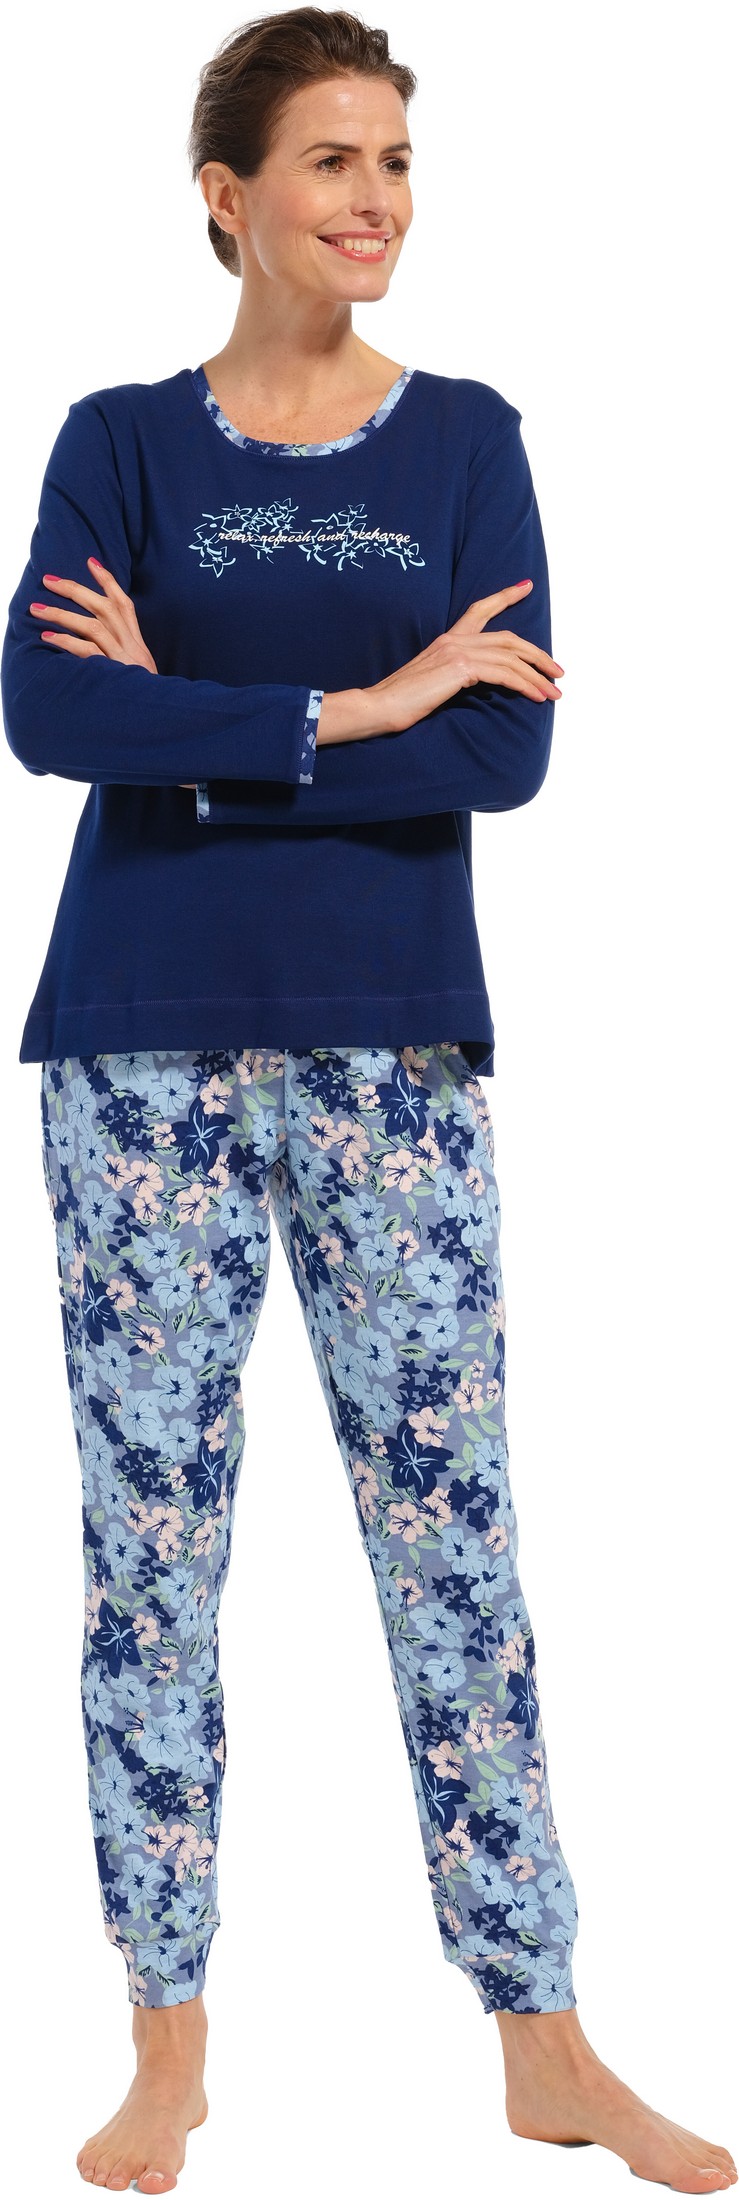 Pastunette dames pyjama 20232-130-3 - Blauw - 44